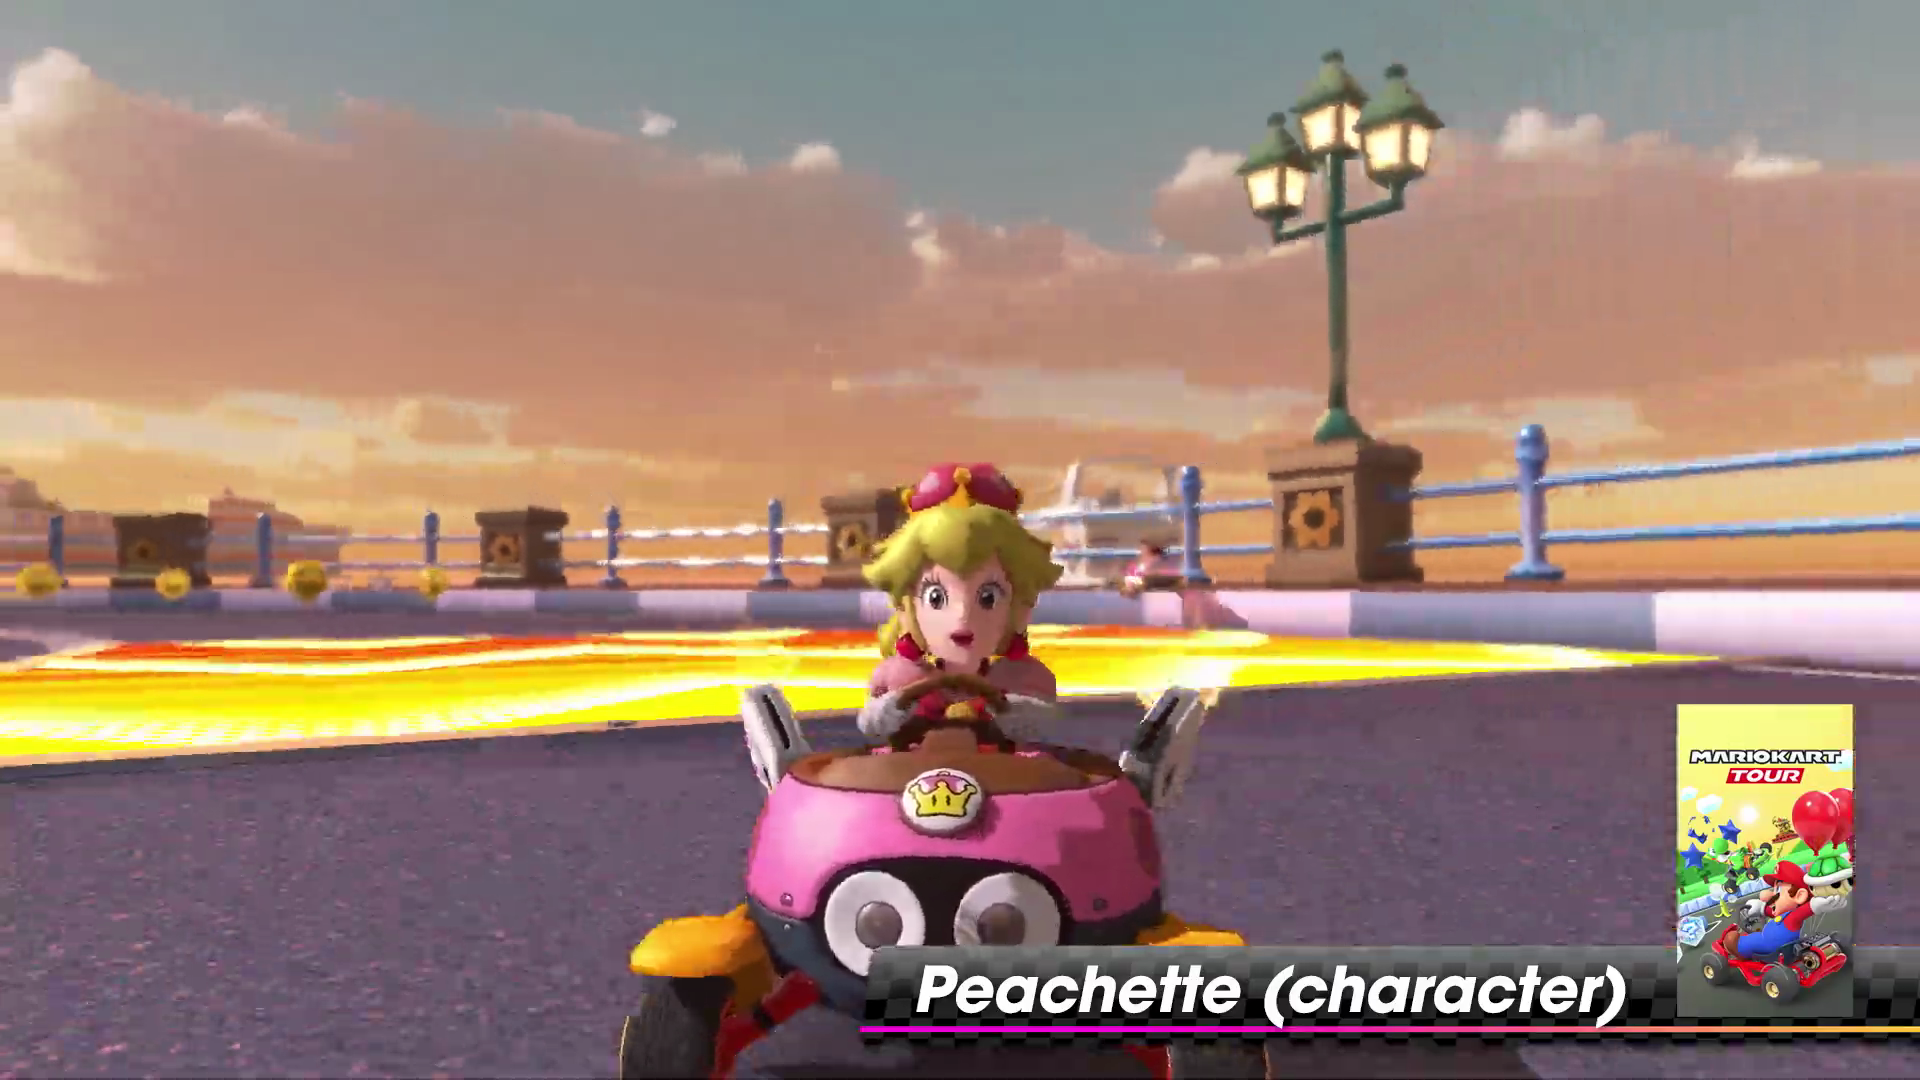 Mario Kart 8 Deluxe - Booster Course Pass Wave 6 - Peachette | Image: Nintendo